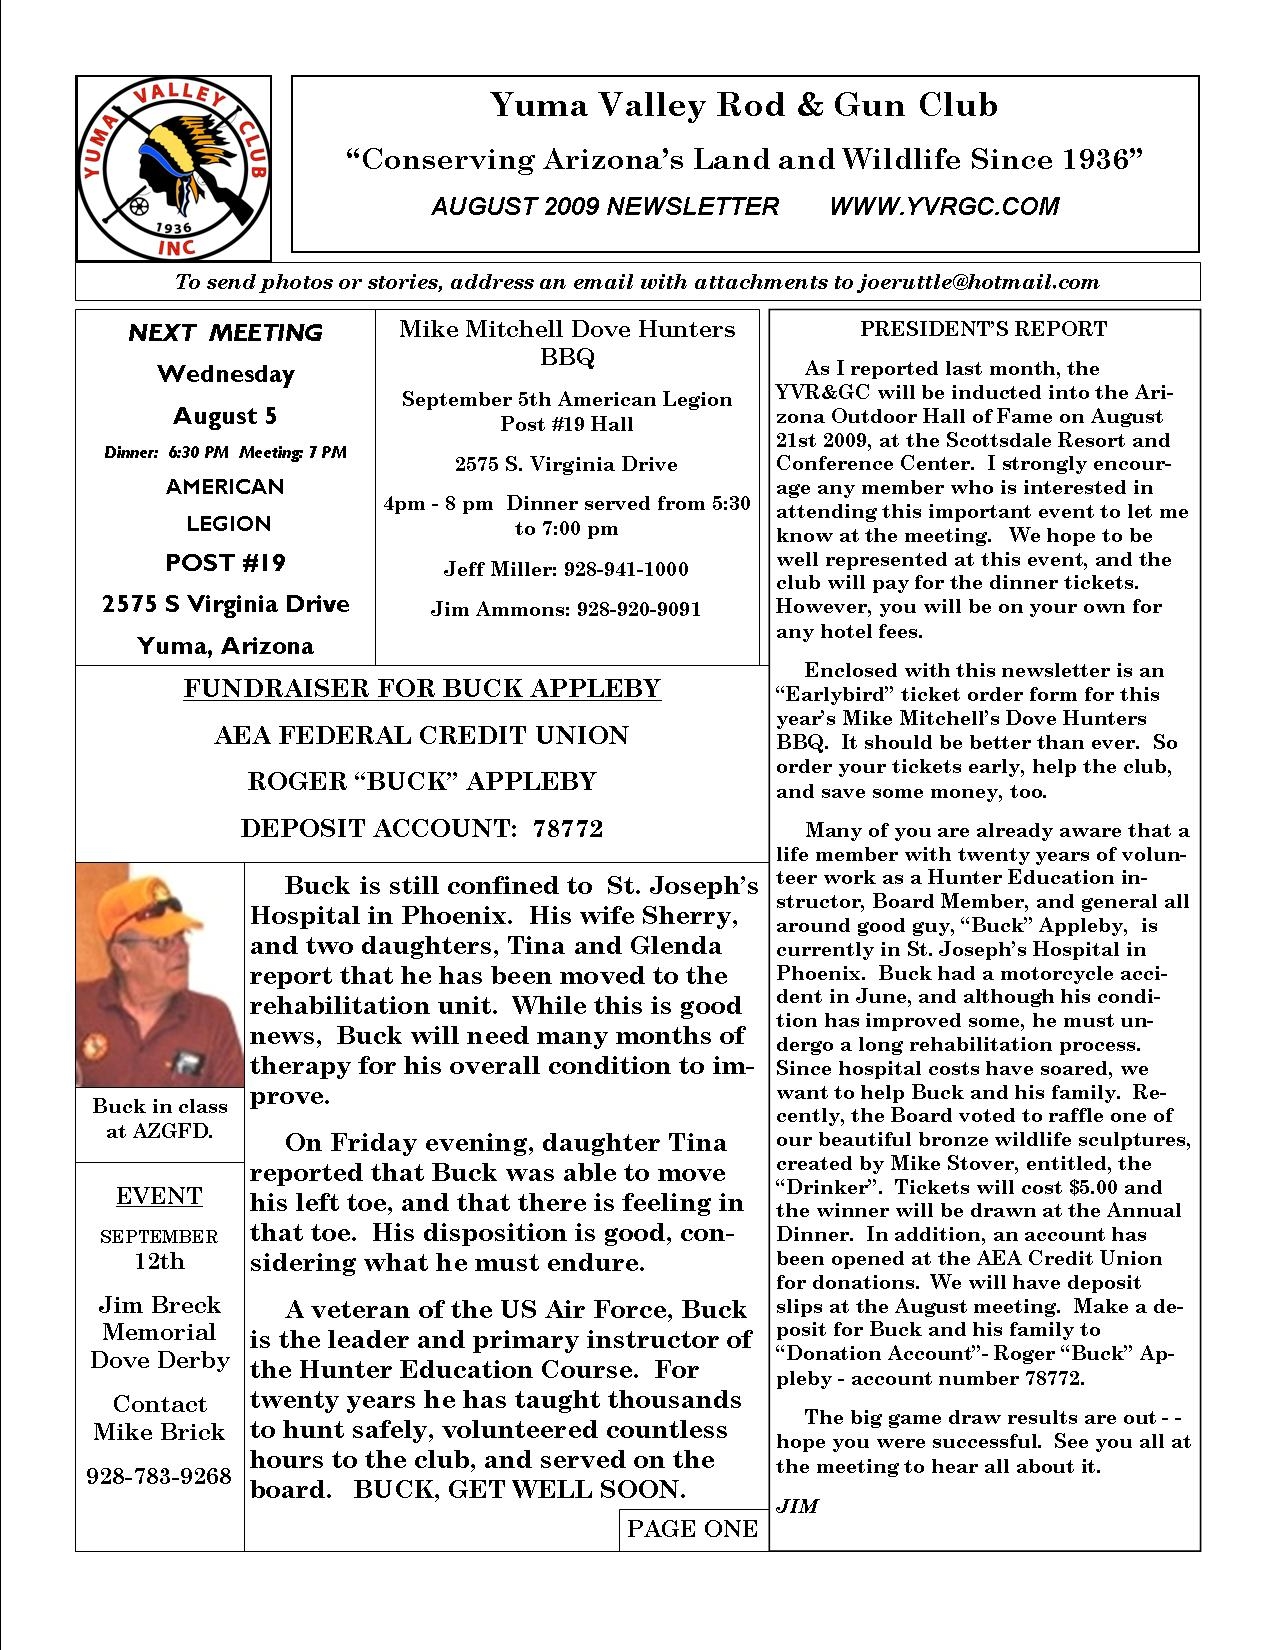 August2009Newsletter/page1.JPG